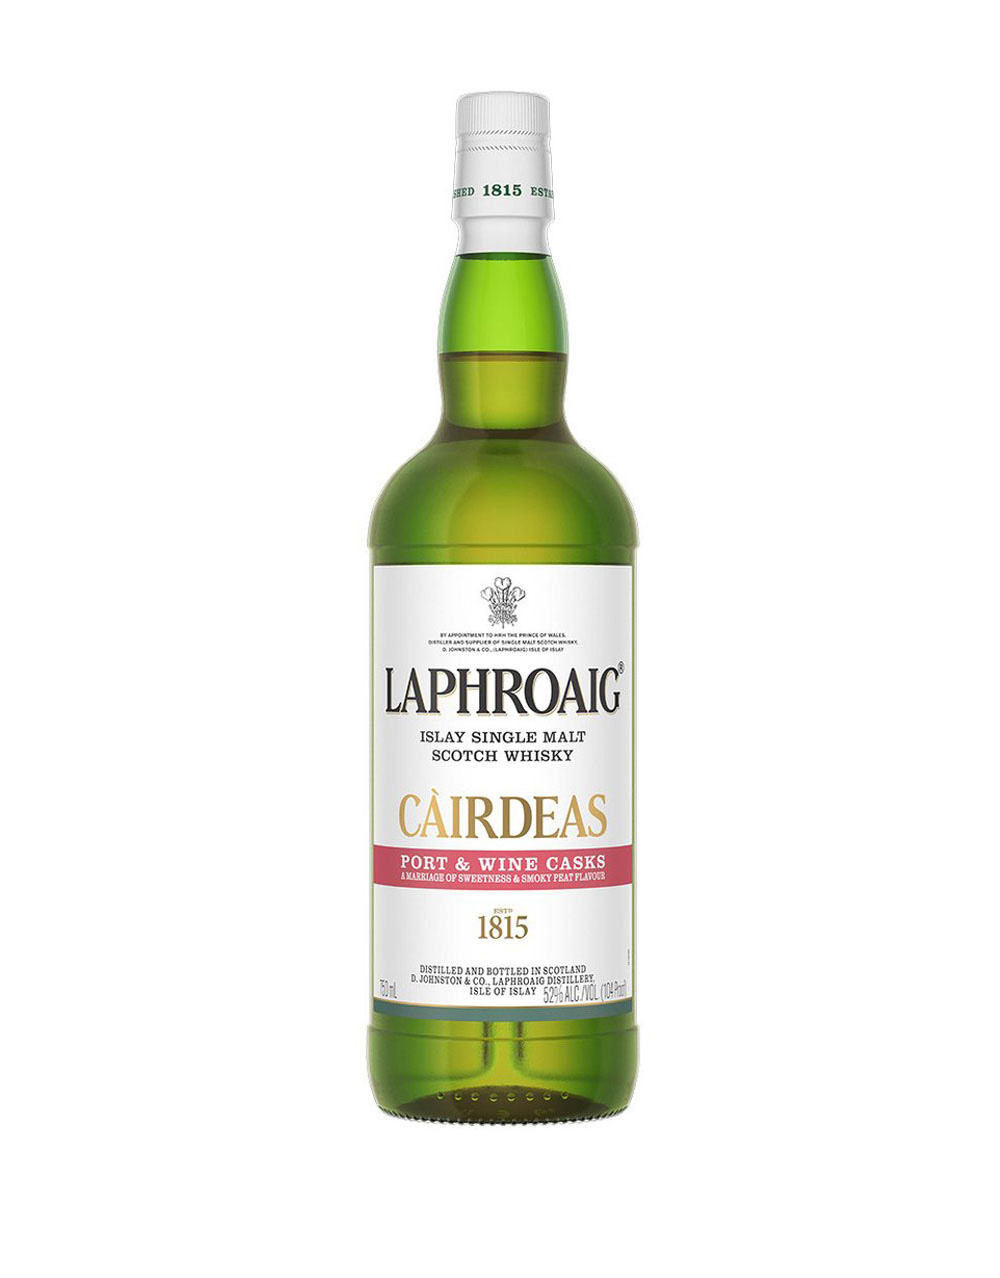 Laphroaig Cairdeas Port & Wine Casks Scotch Whisky